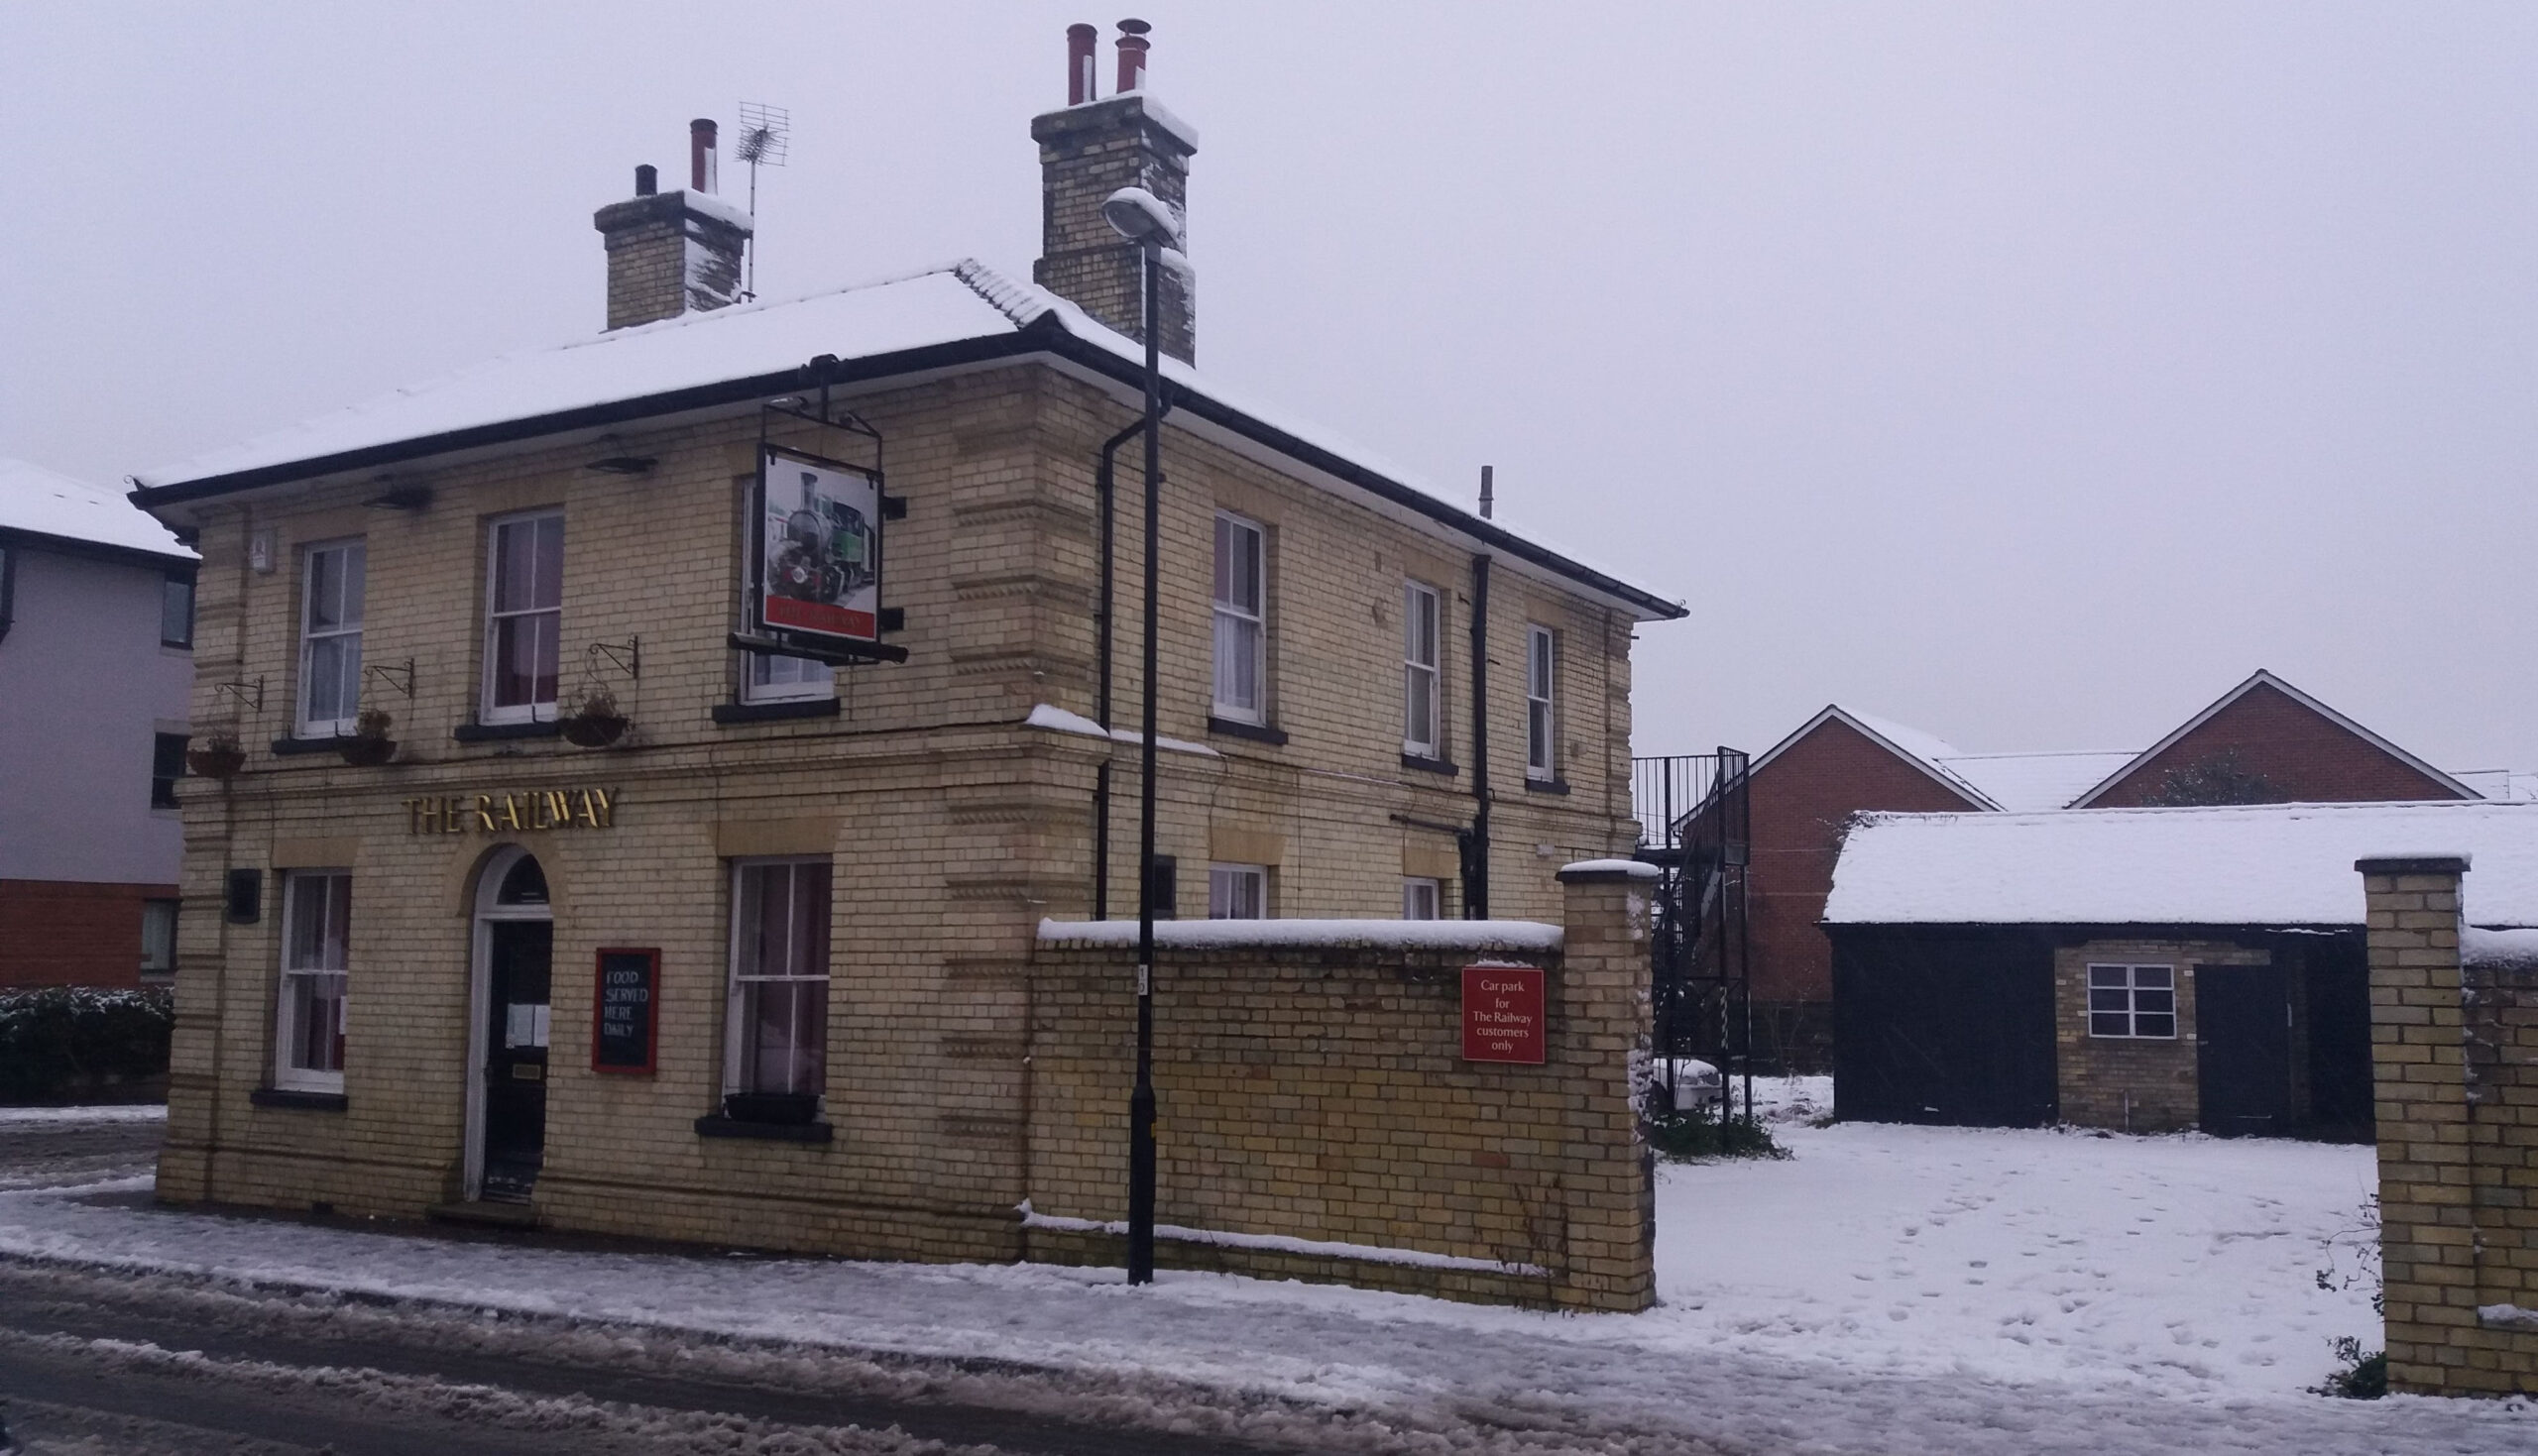 Railway Pub in the snow.December 2020